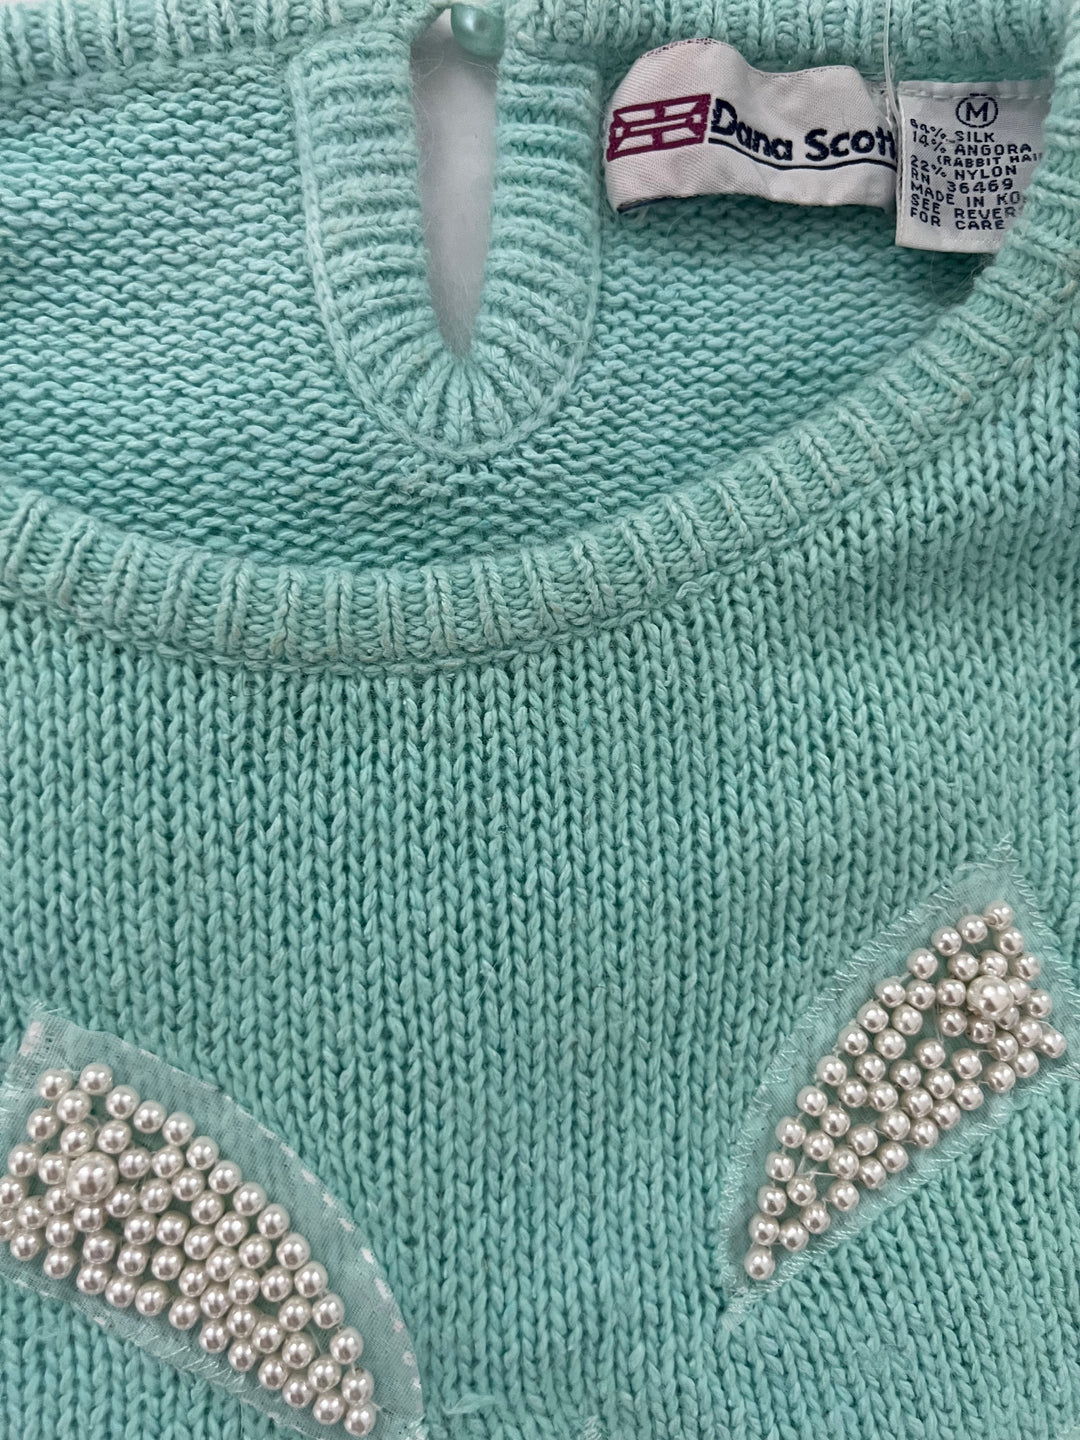 Vintage NWT Green Dana Scott Sweater with White Beads